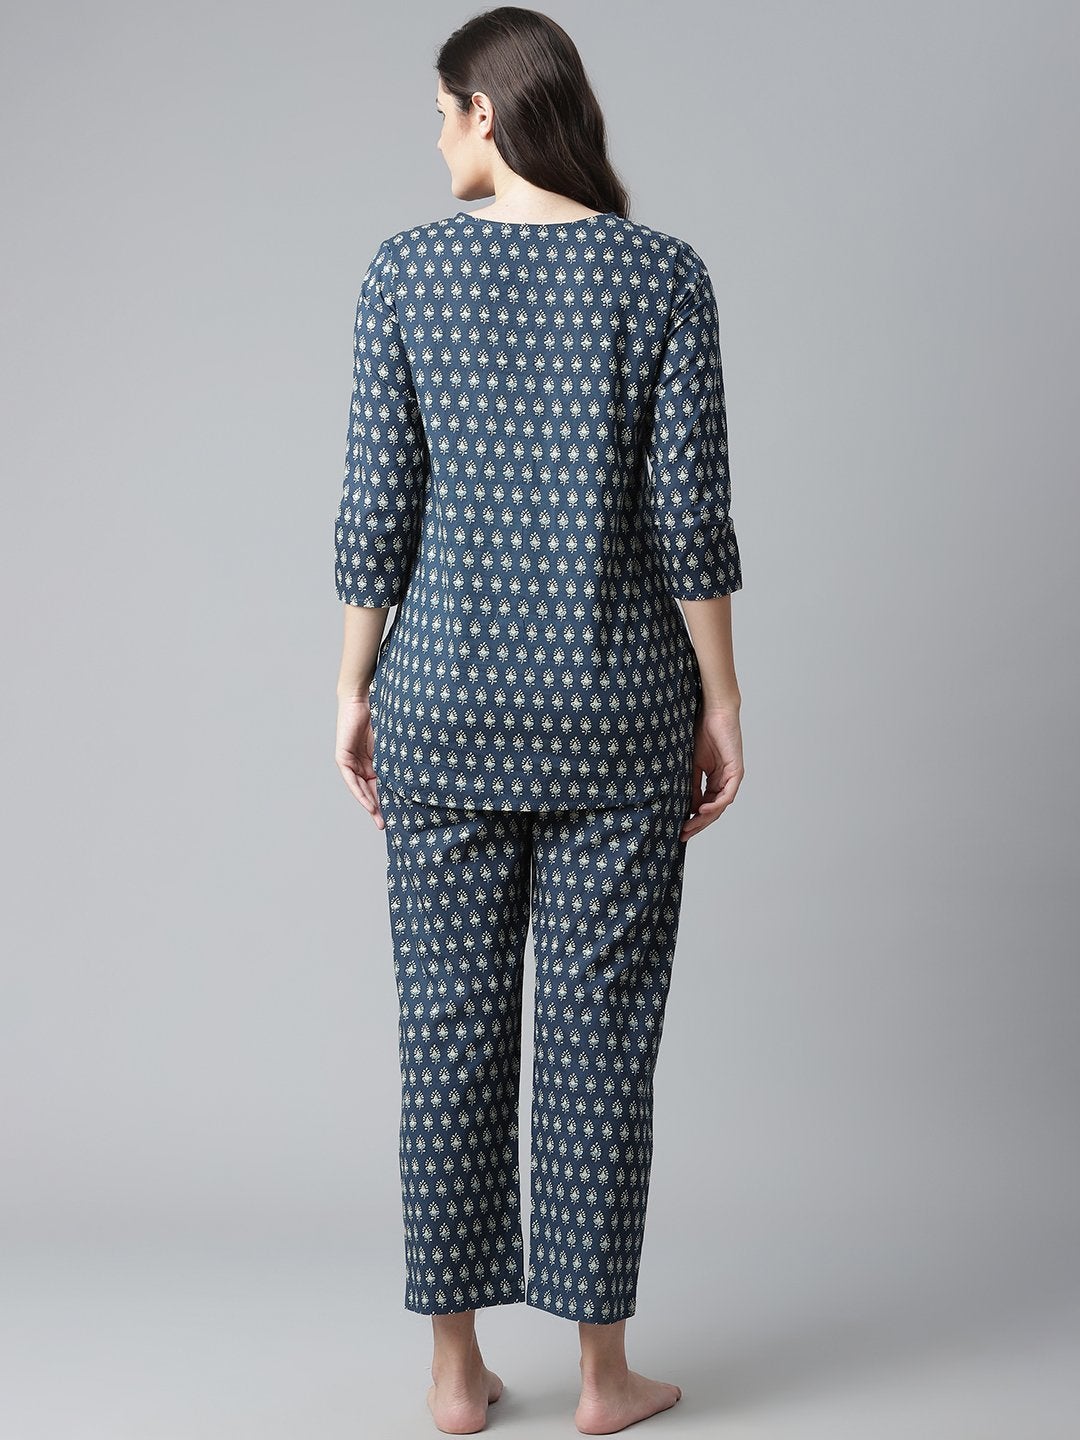 Women's Dark Blue Buti Print Cotton Nightwear - Divena